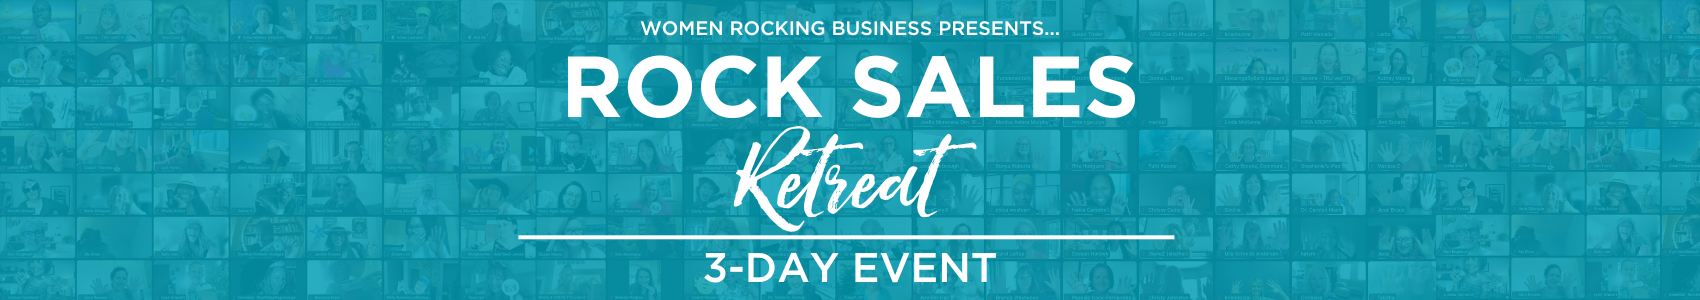 Women Rocking Biz Presents... ROCK SALES RETREAT - 3-Day event